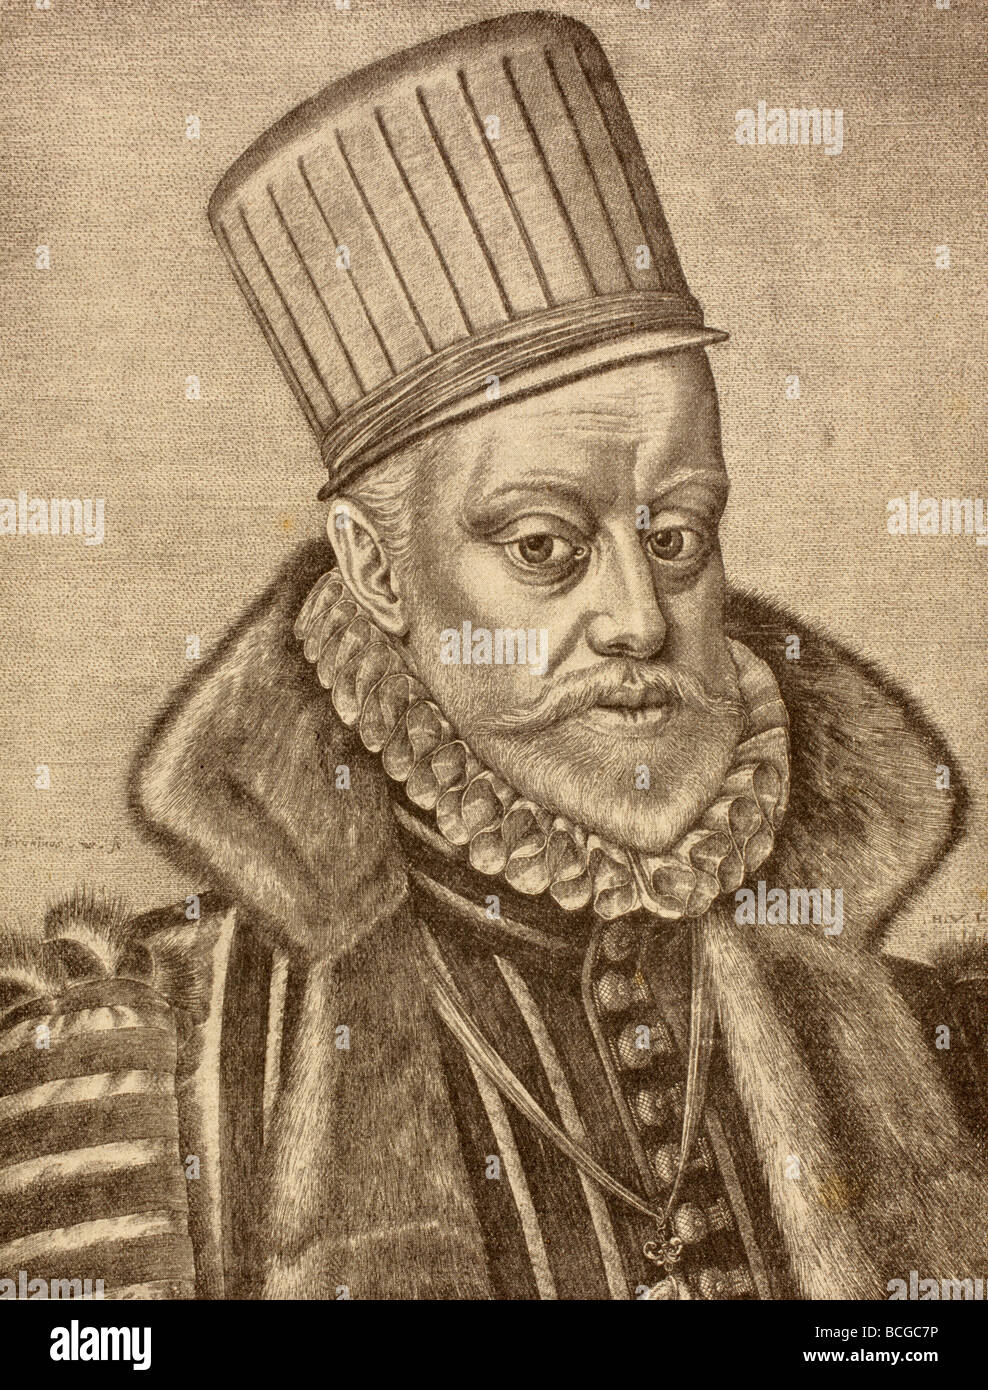 Philip II, 1527 - 1598. King of Spain, 1556 - 1598. Felipe II rey de España. Stock Photo